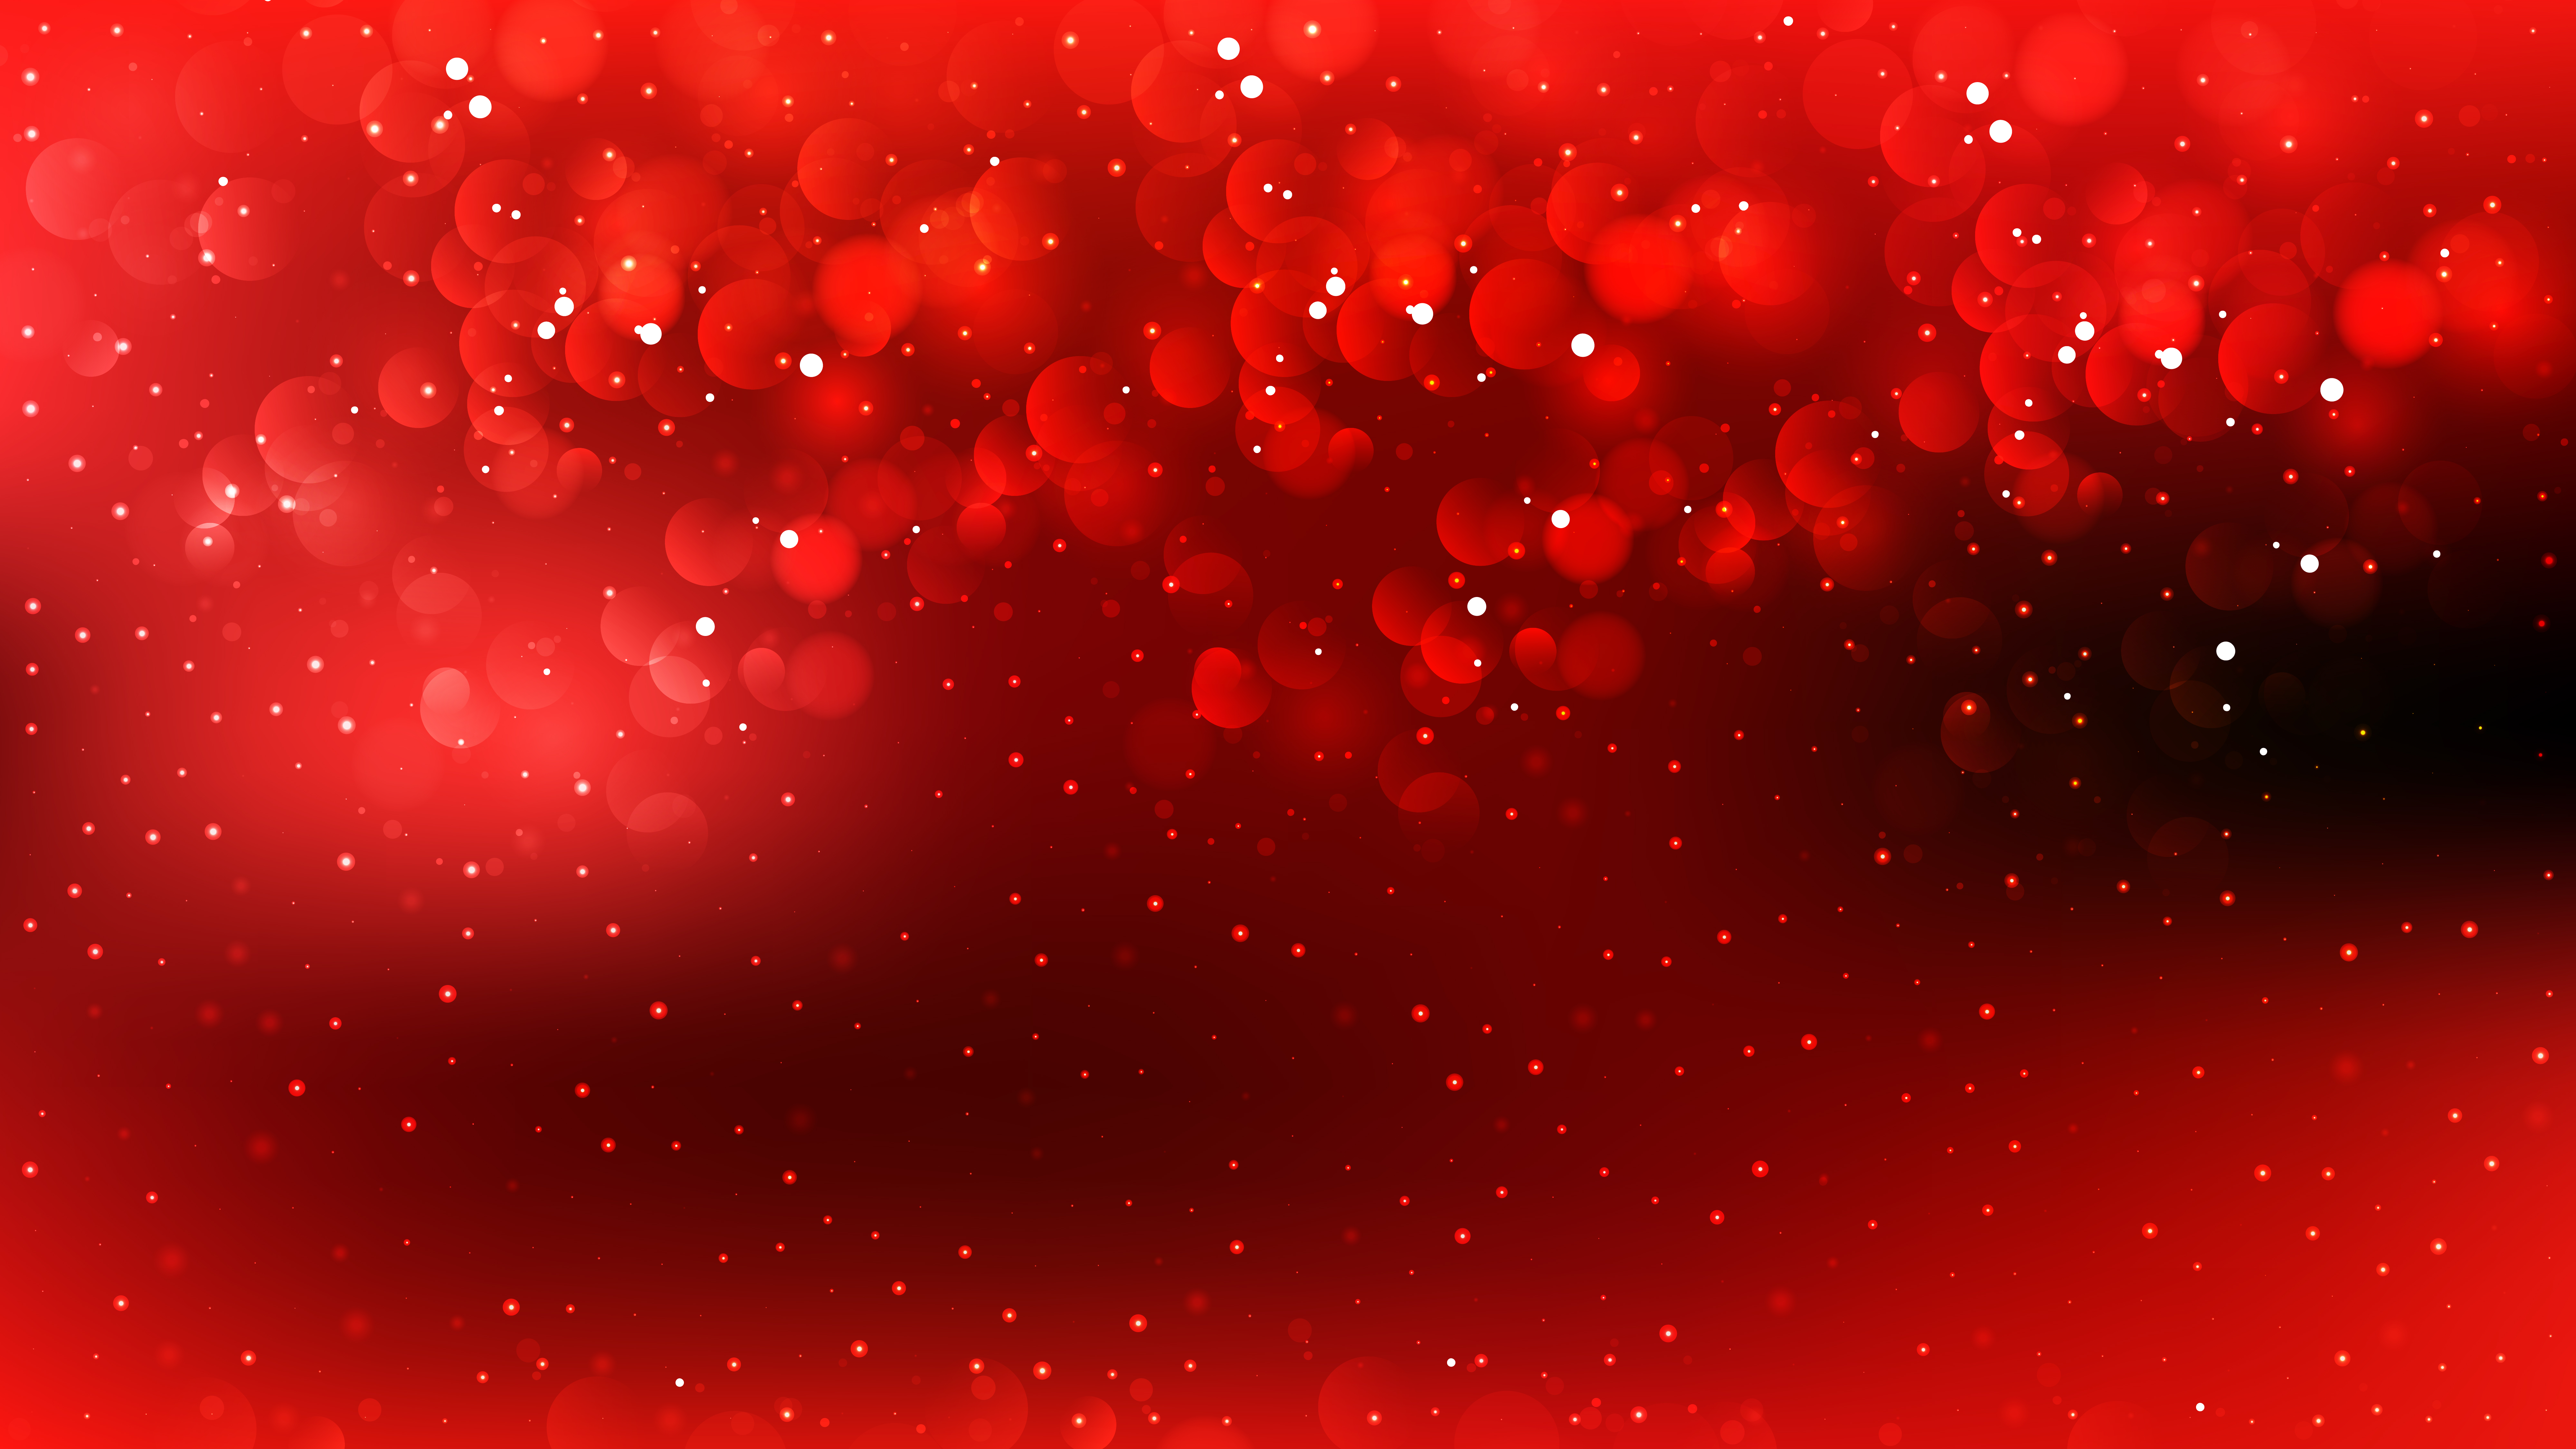 Dark Red Defocused Background